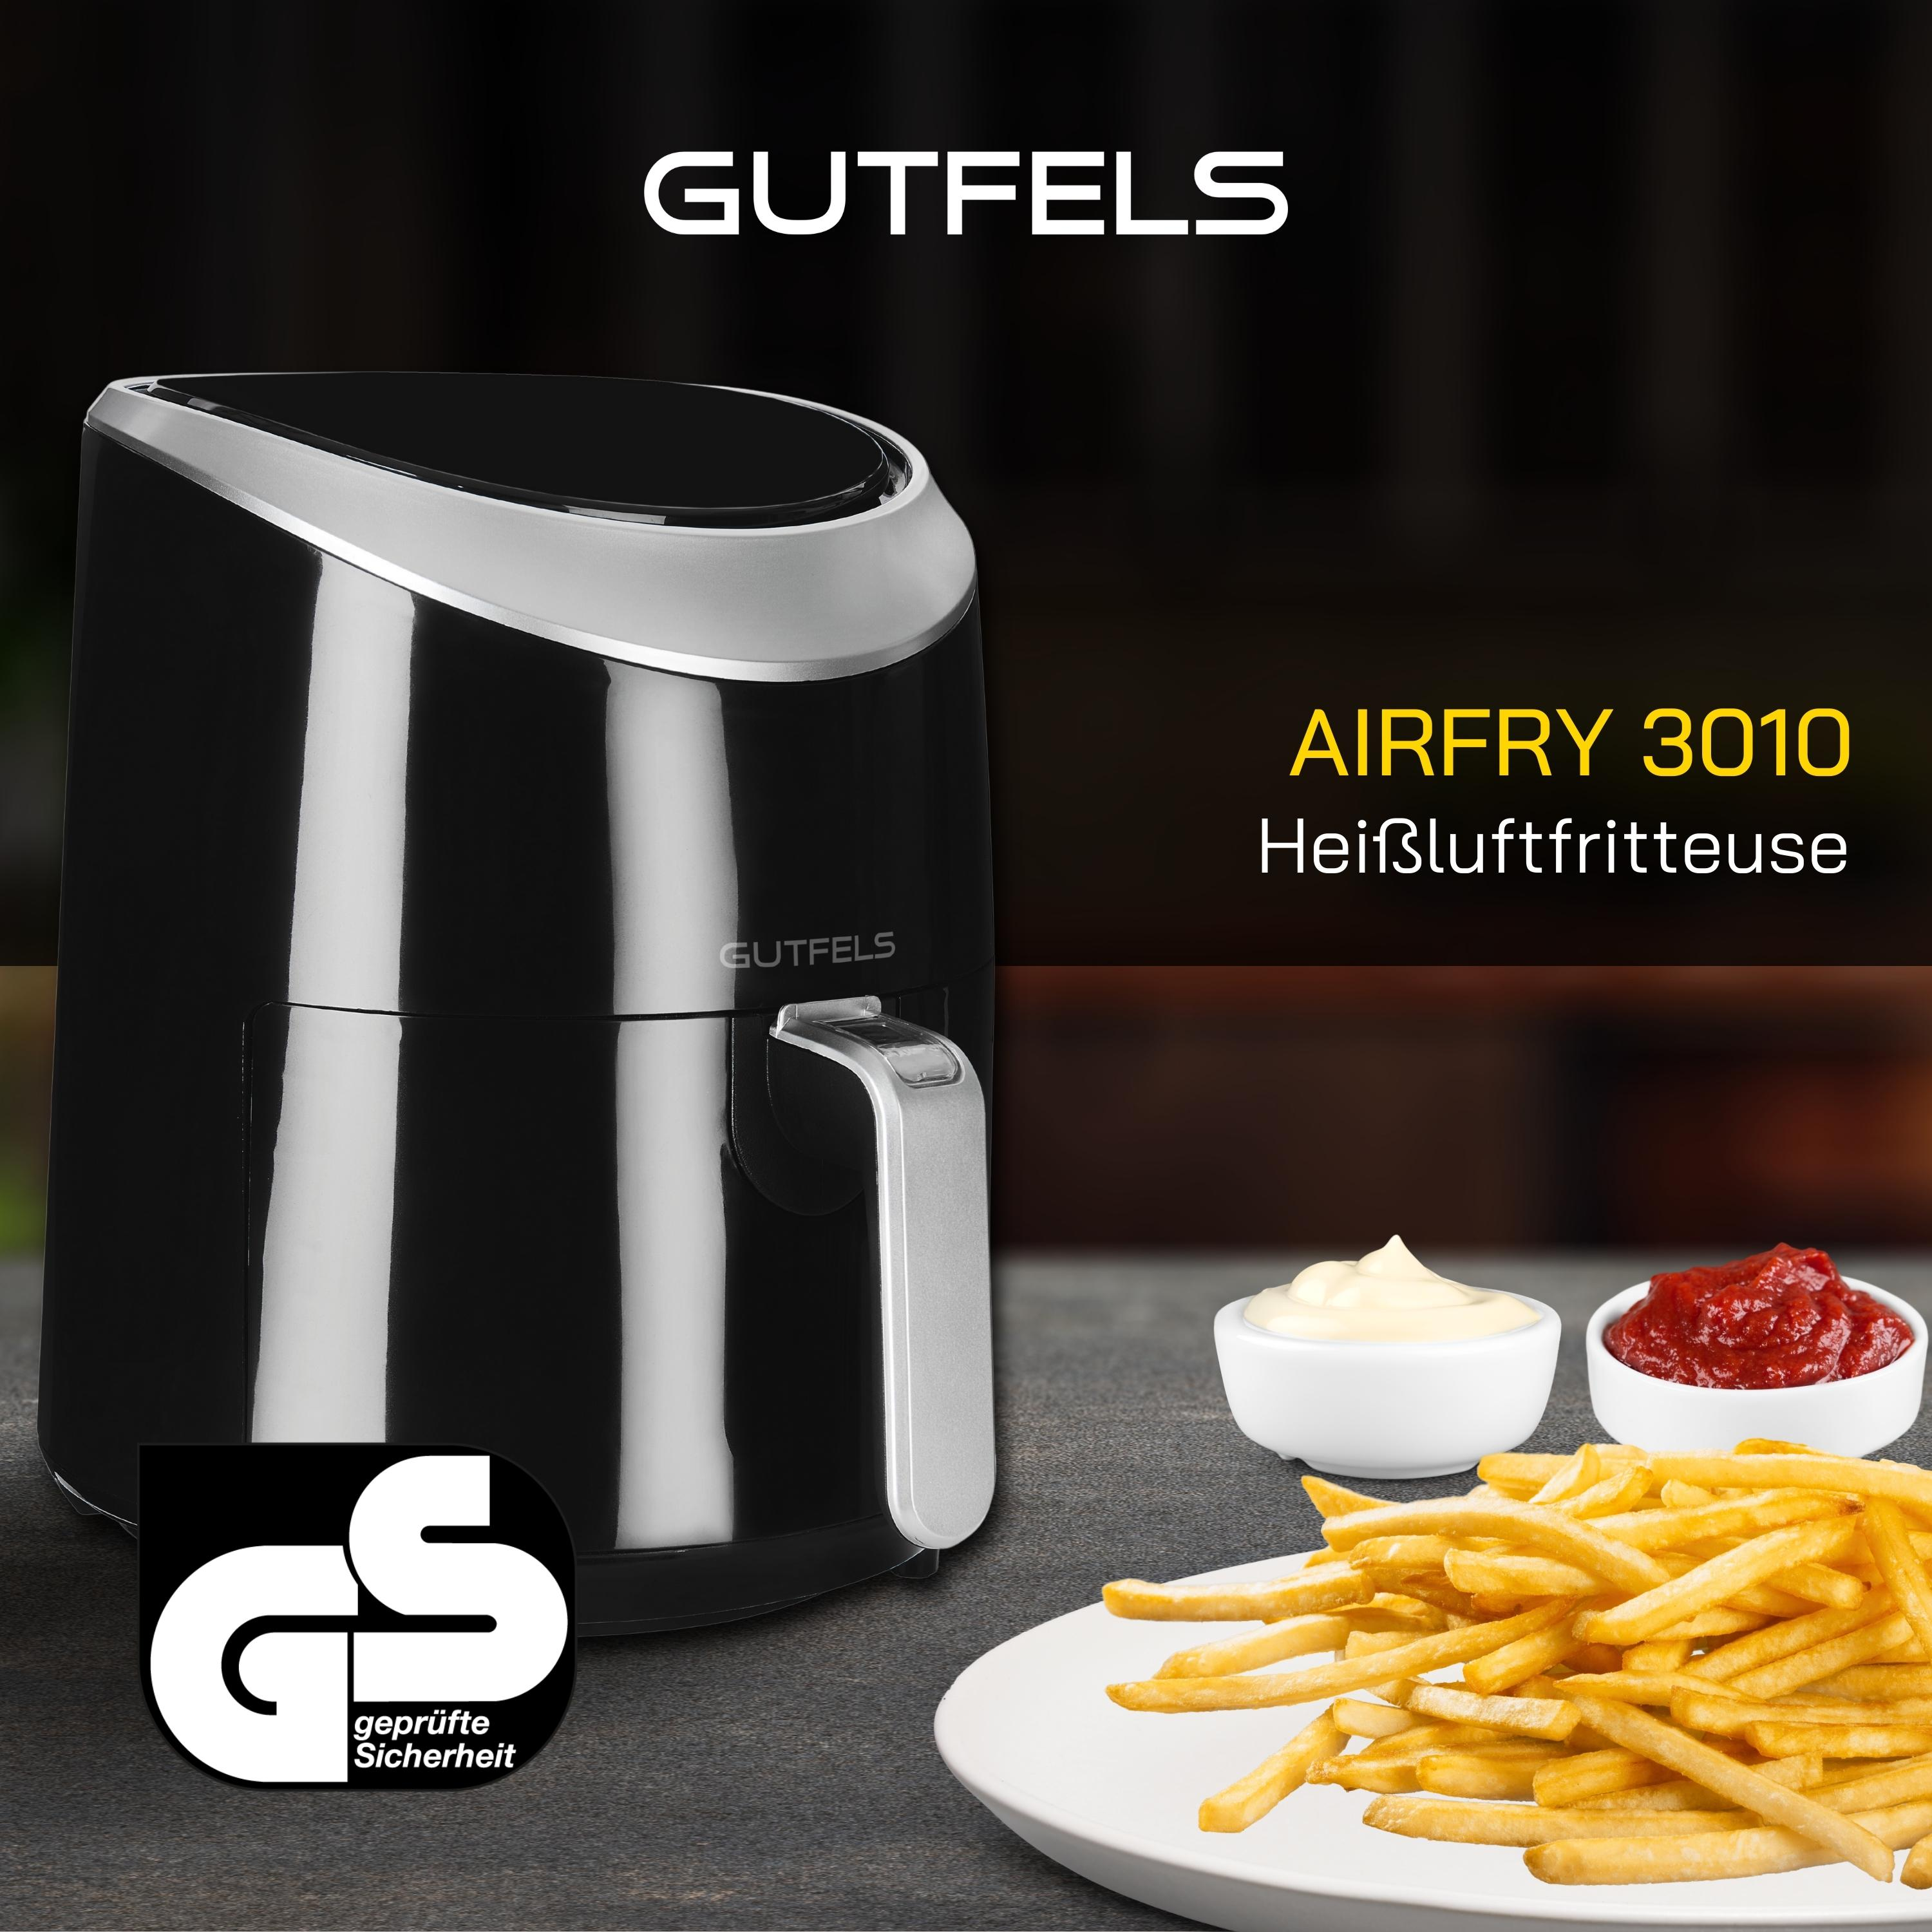 GUTFELS AIRFRY Schwarz 1300 Heißluftfritteuse 3010 Watt